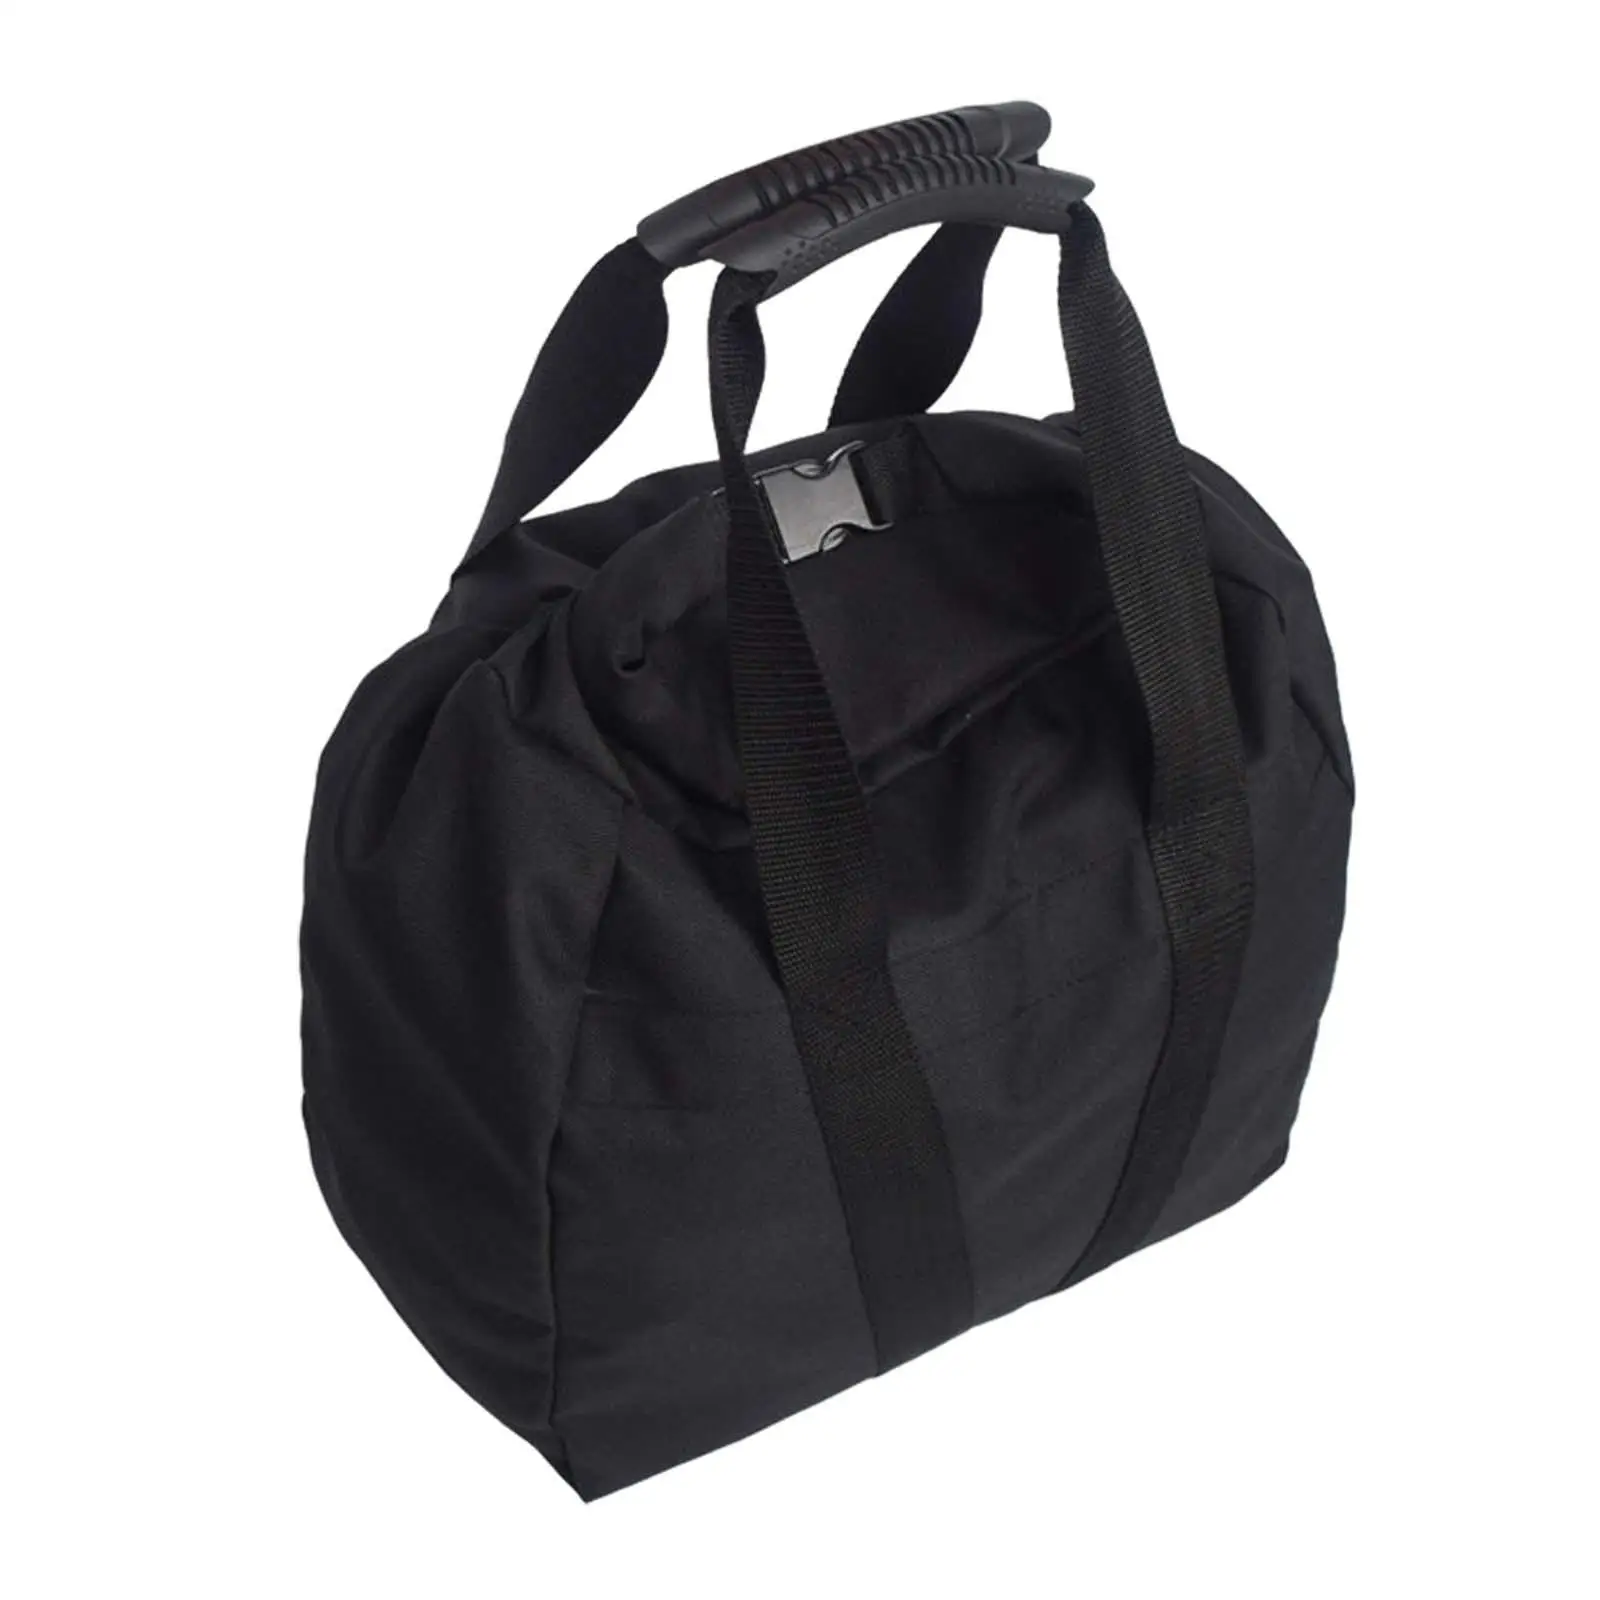 Weight Sand Bag Fitness Equipment Power Sandbag for Gym Weight Lifting Home